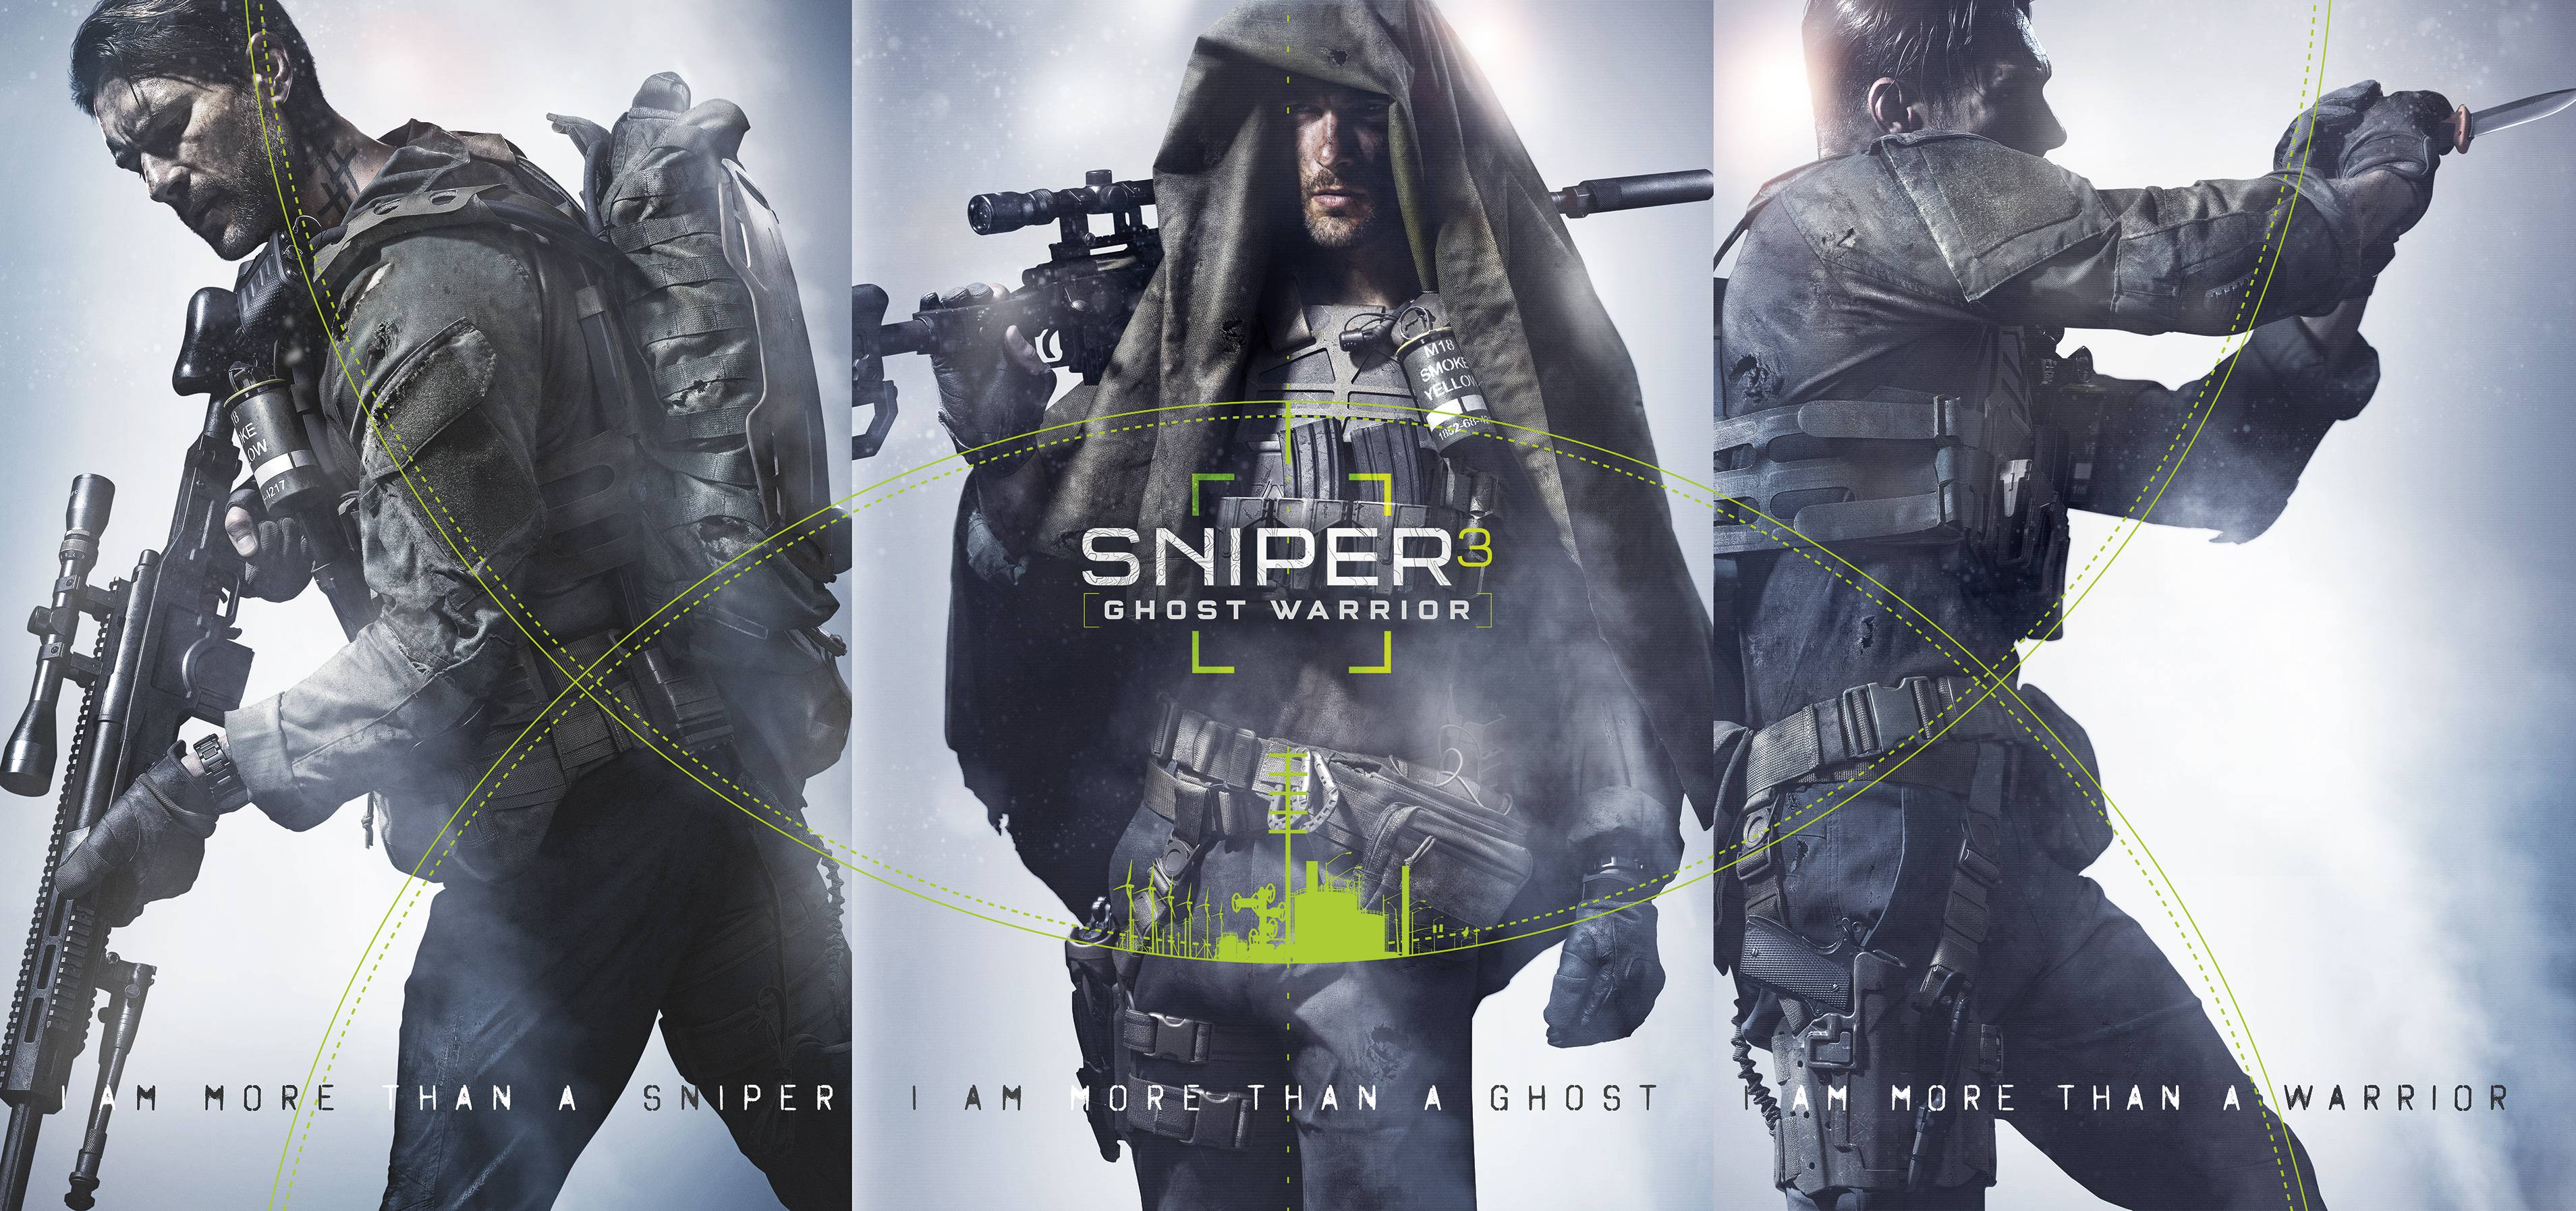 E3 2015: Sniper Ghost Warrior 3 Dev Team Explains Their Ambitious